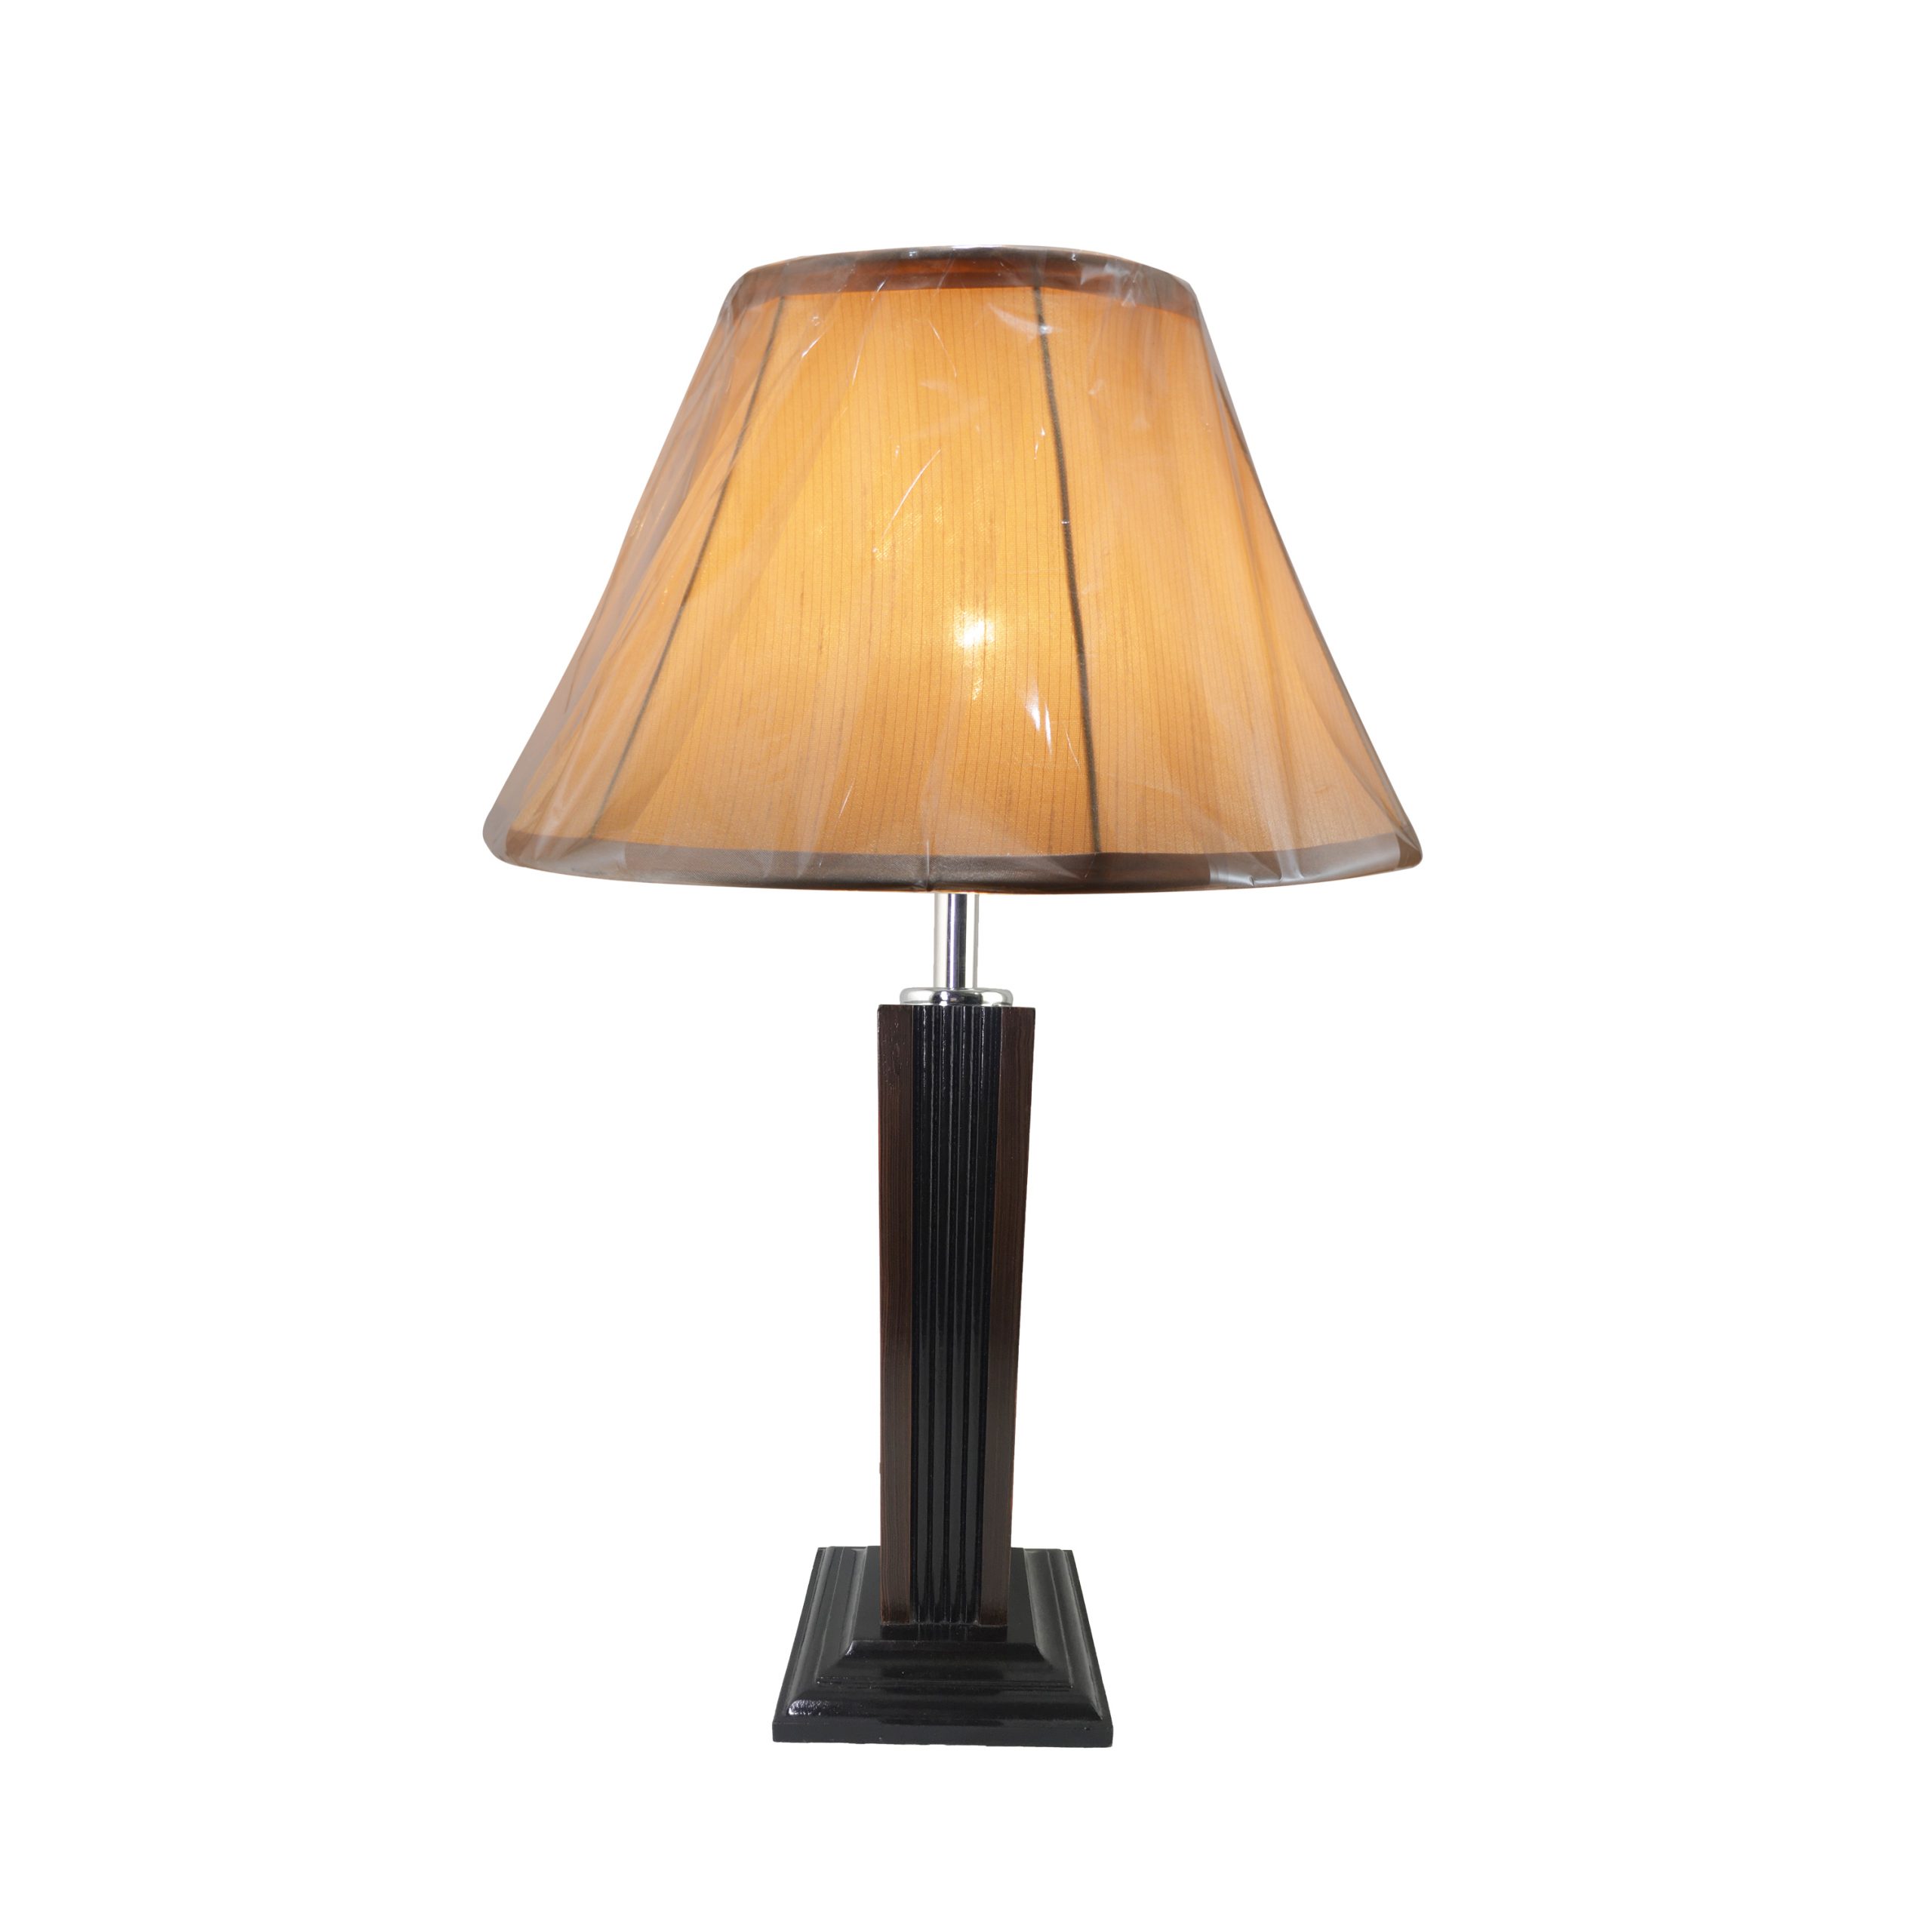 Lamp-6-2-scaled-1.jpg